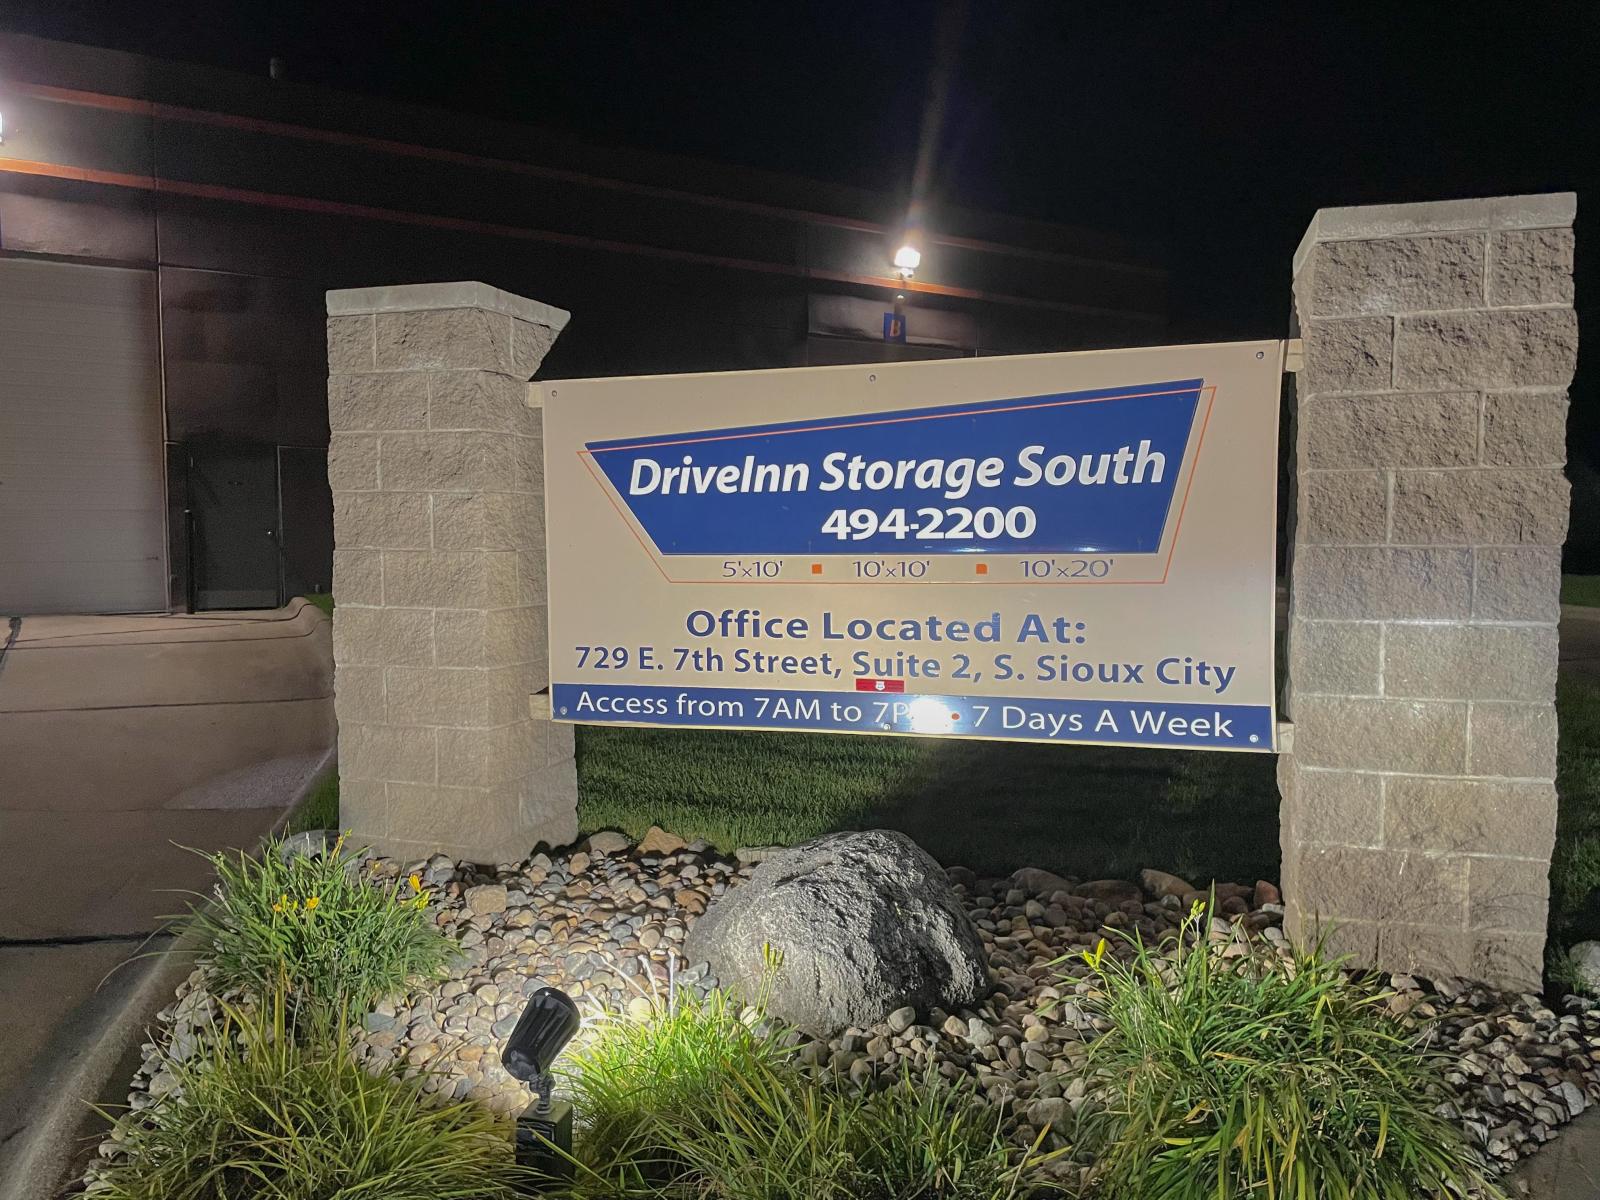 DriveInn Self Storage - South sign at night